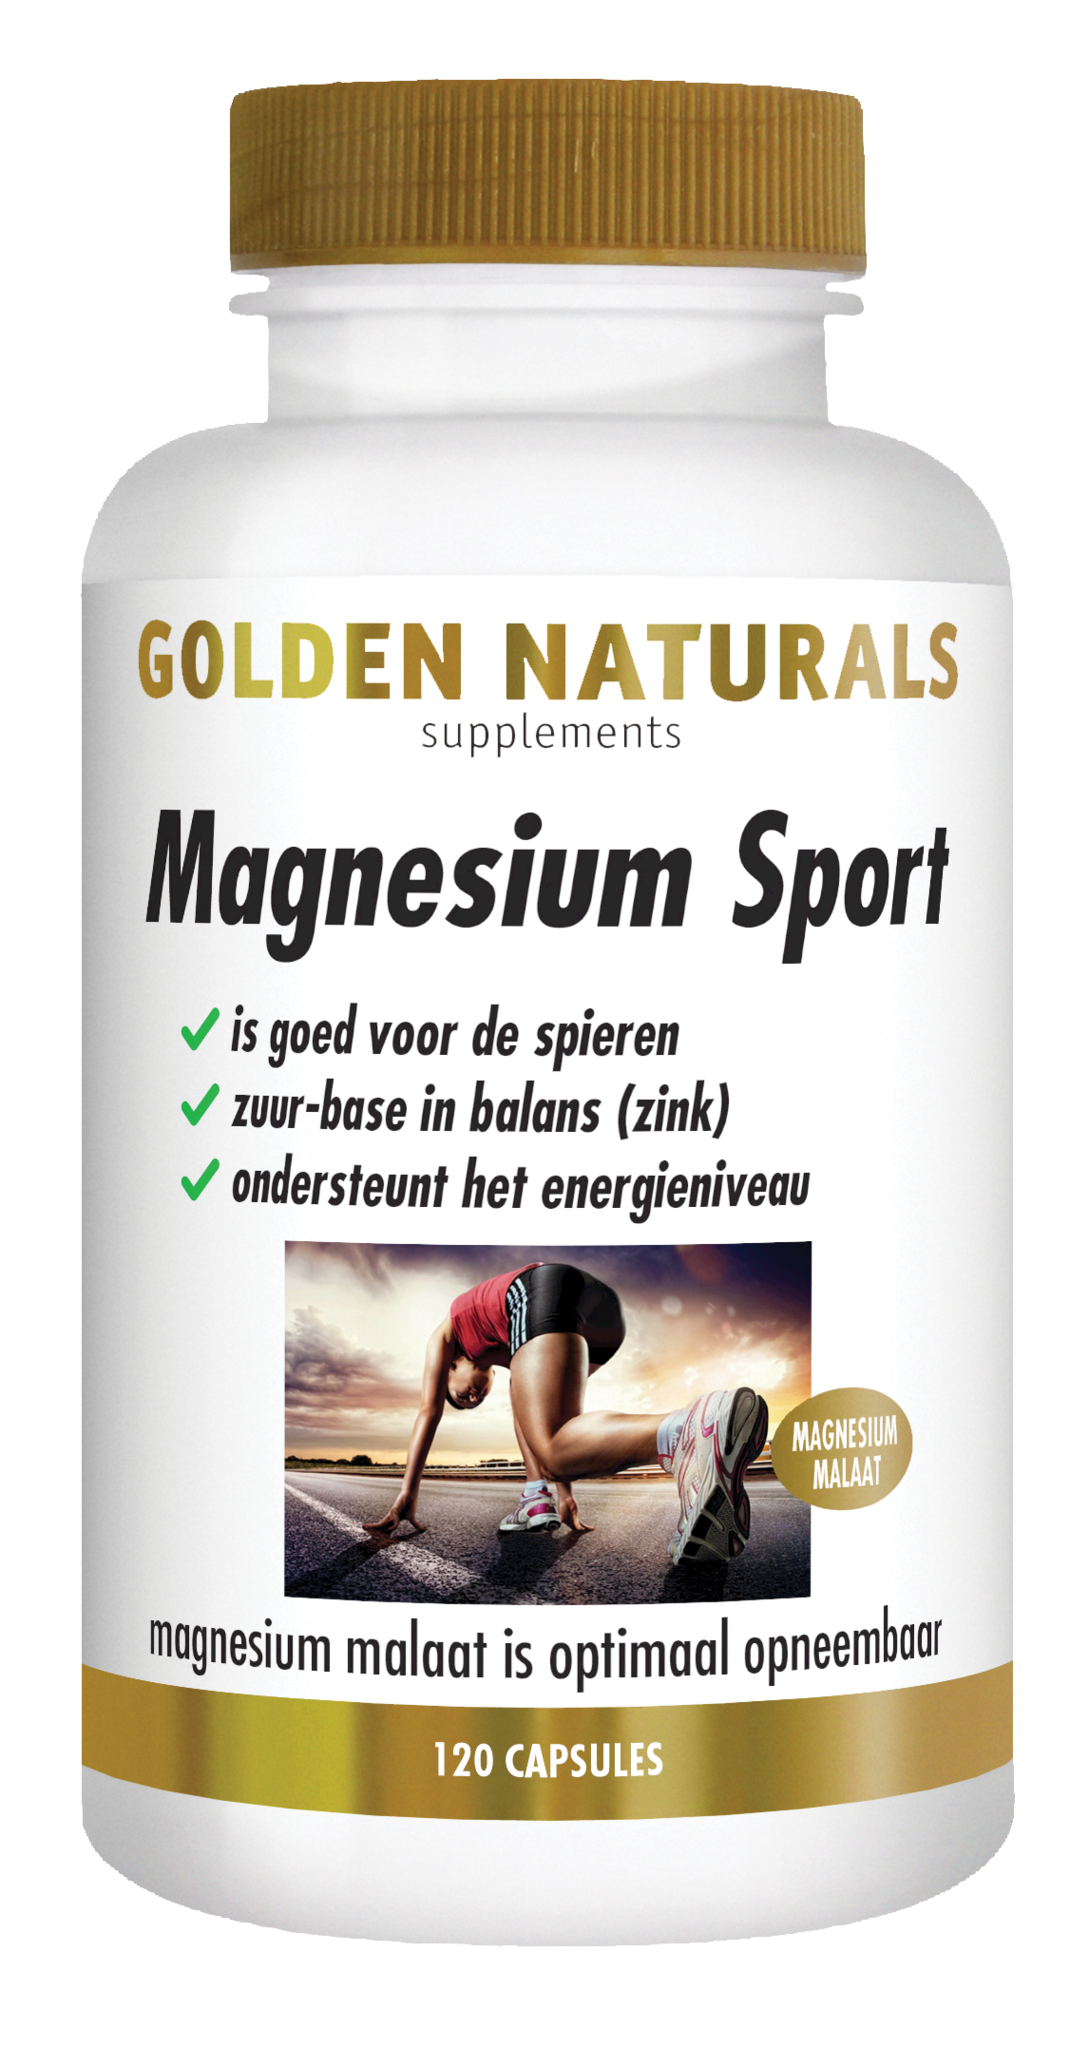 Golden Naturals Golden Naturals Magnesium Sport (120 Vegetarische Kapseln)